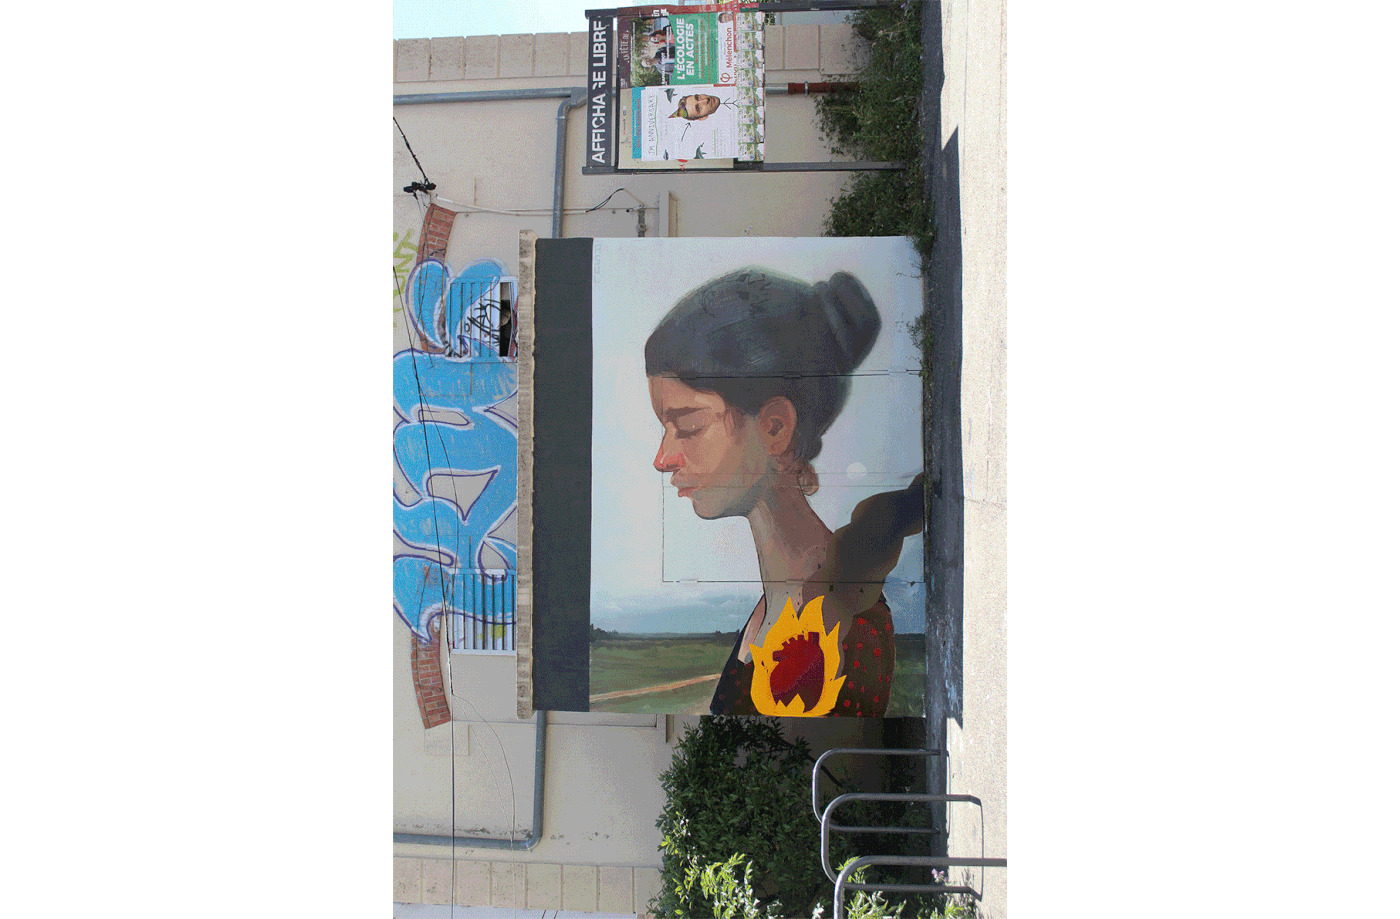 Gifiti heart burning girl portrait girl painting girl illustration GIRL graffiti asul